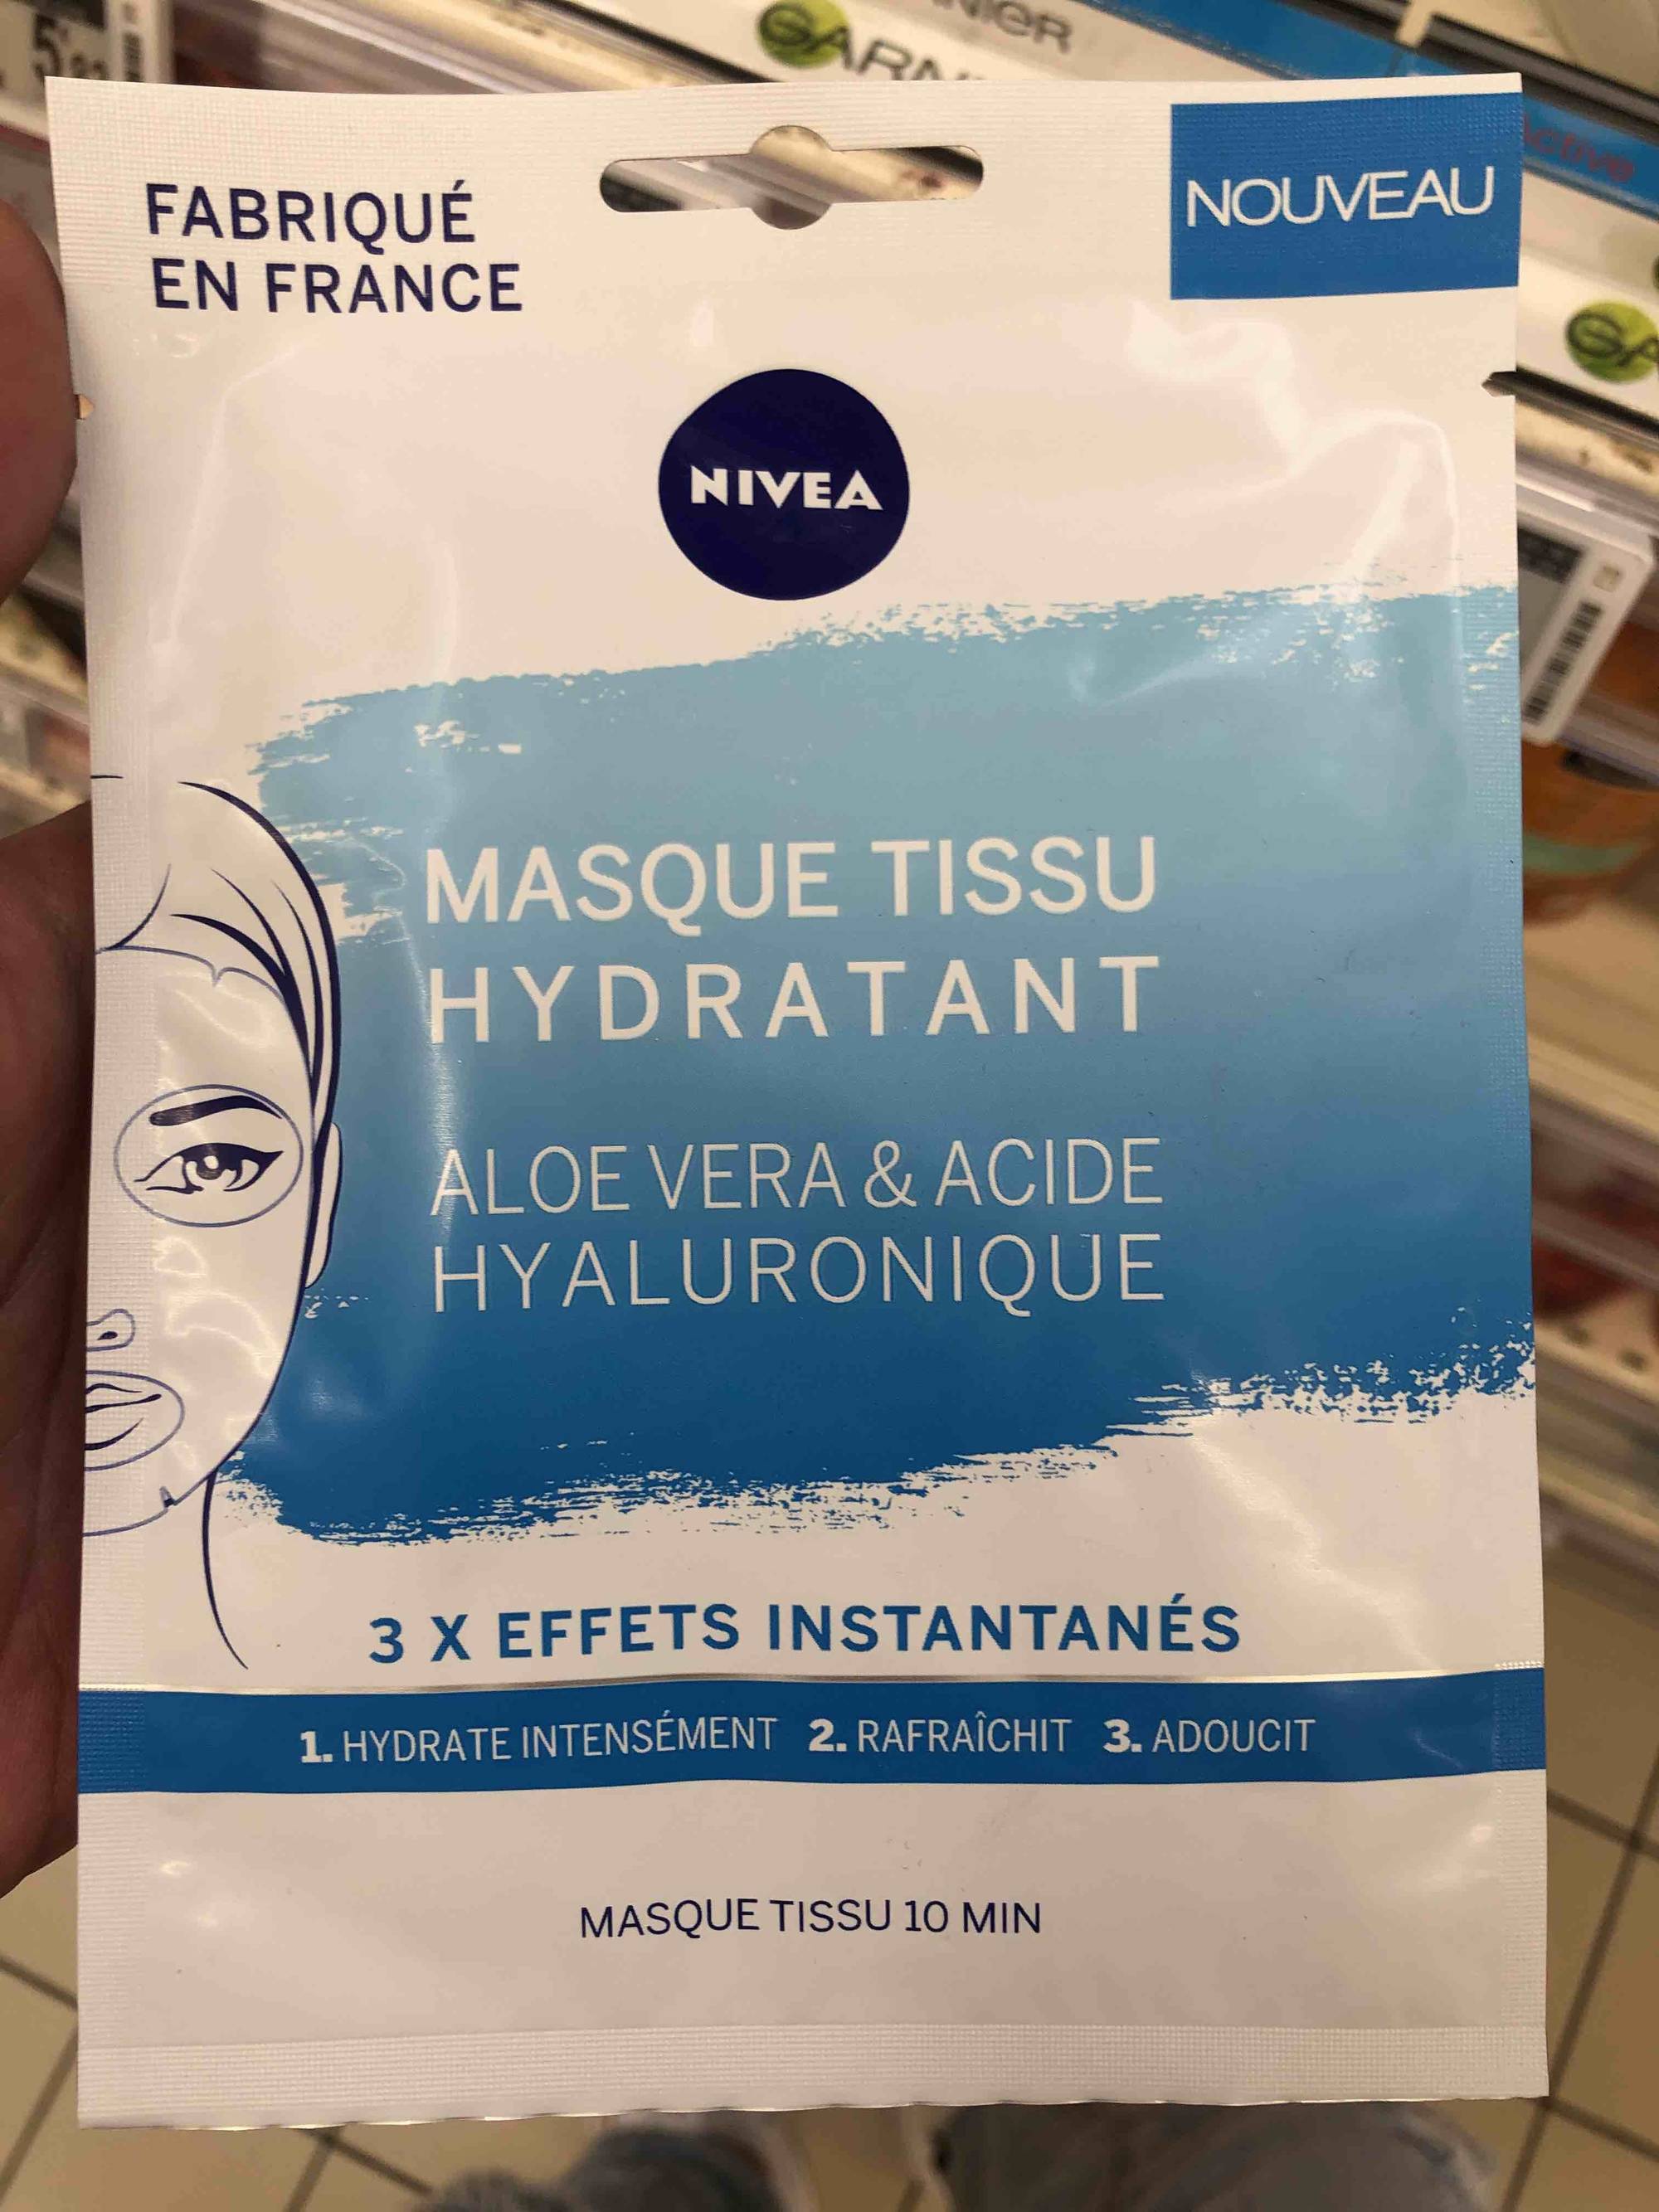 NIVEA - Masque tissu hydratant